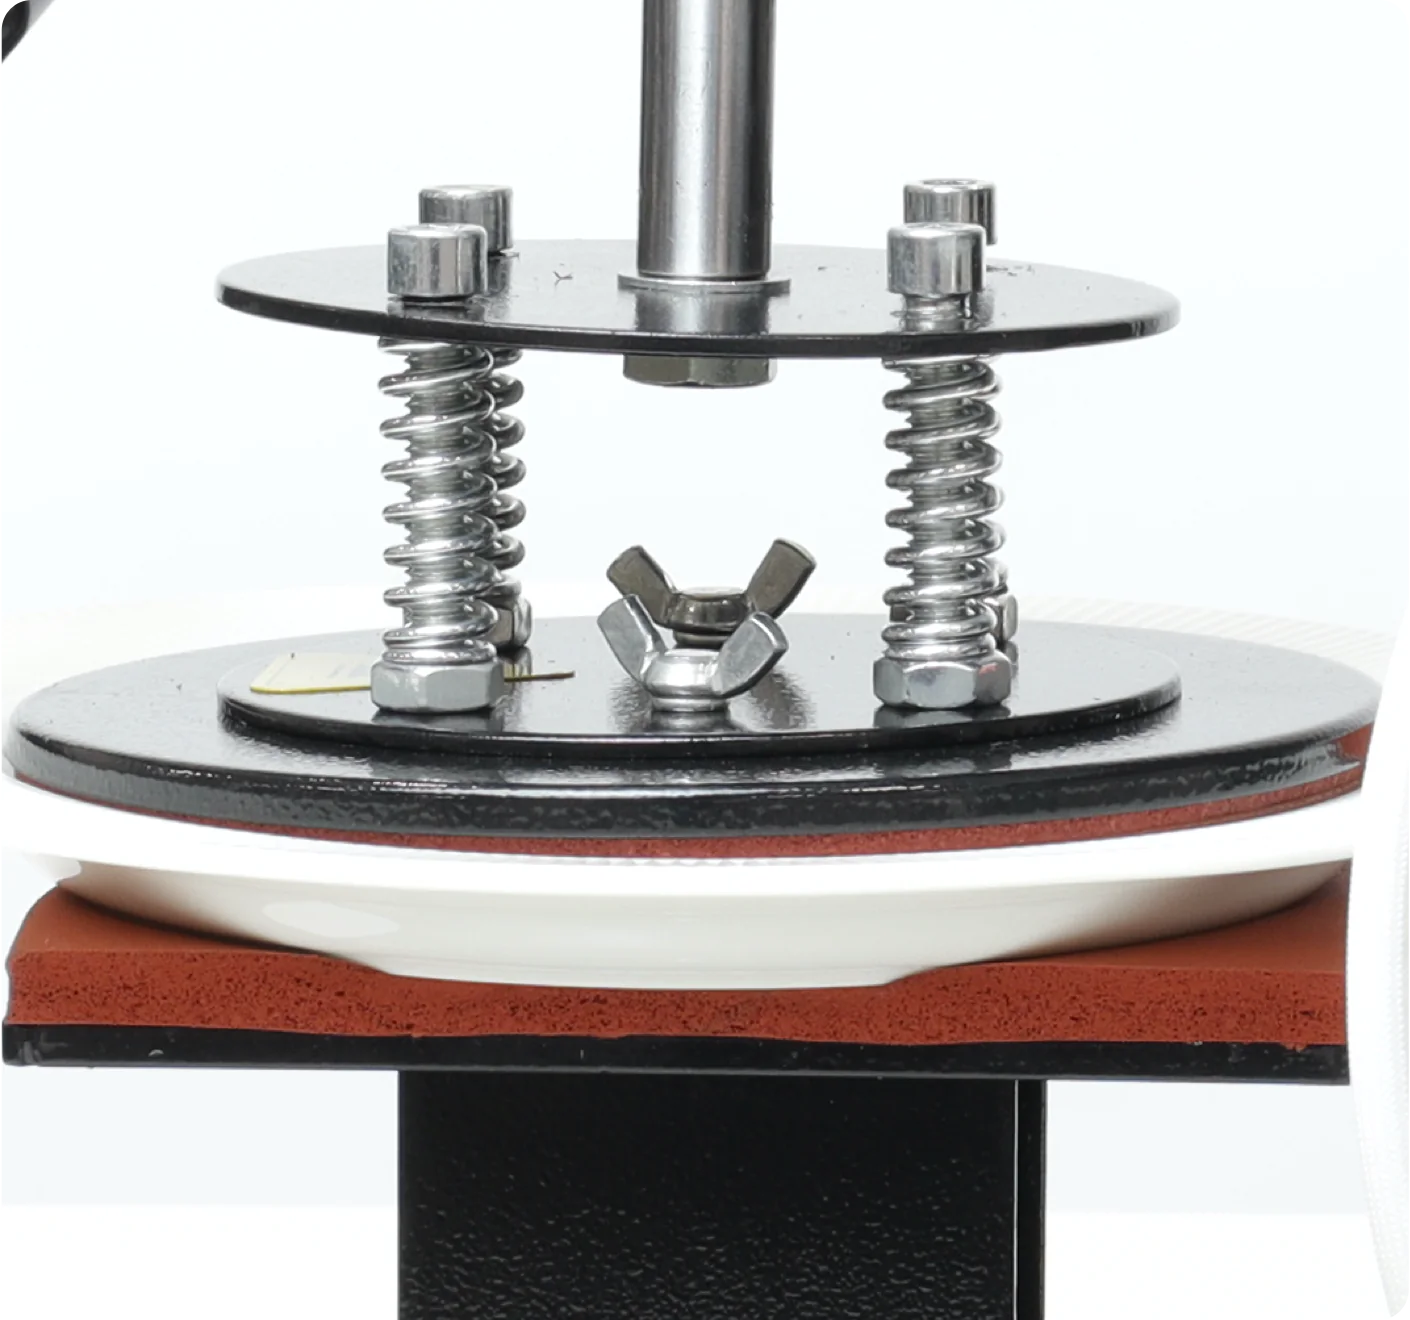 iKonix plate heat press powerful clamp mechanism